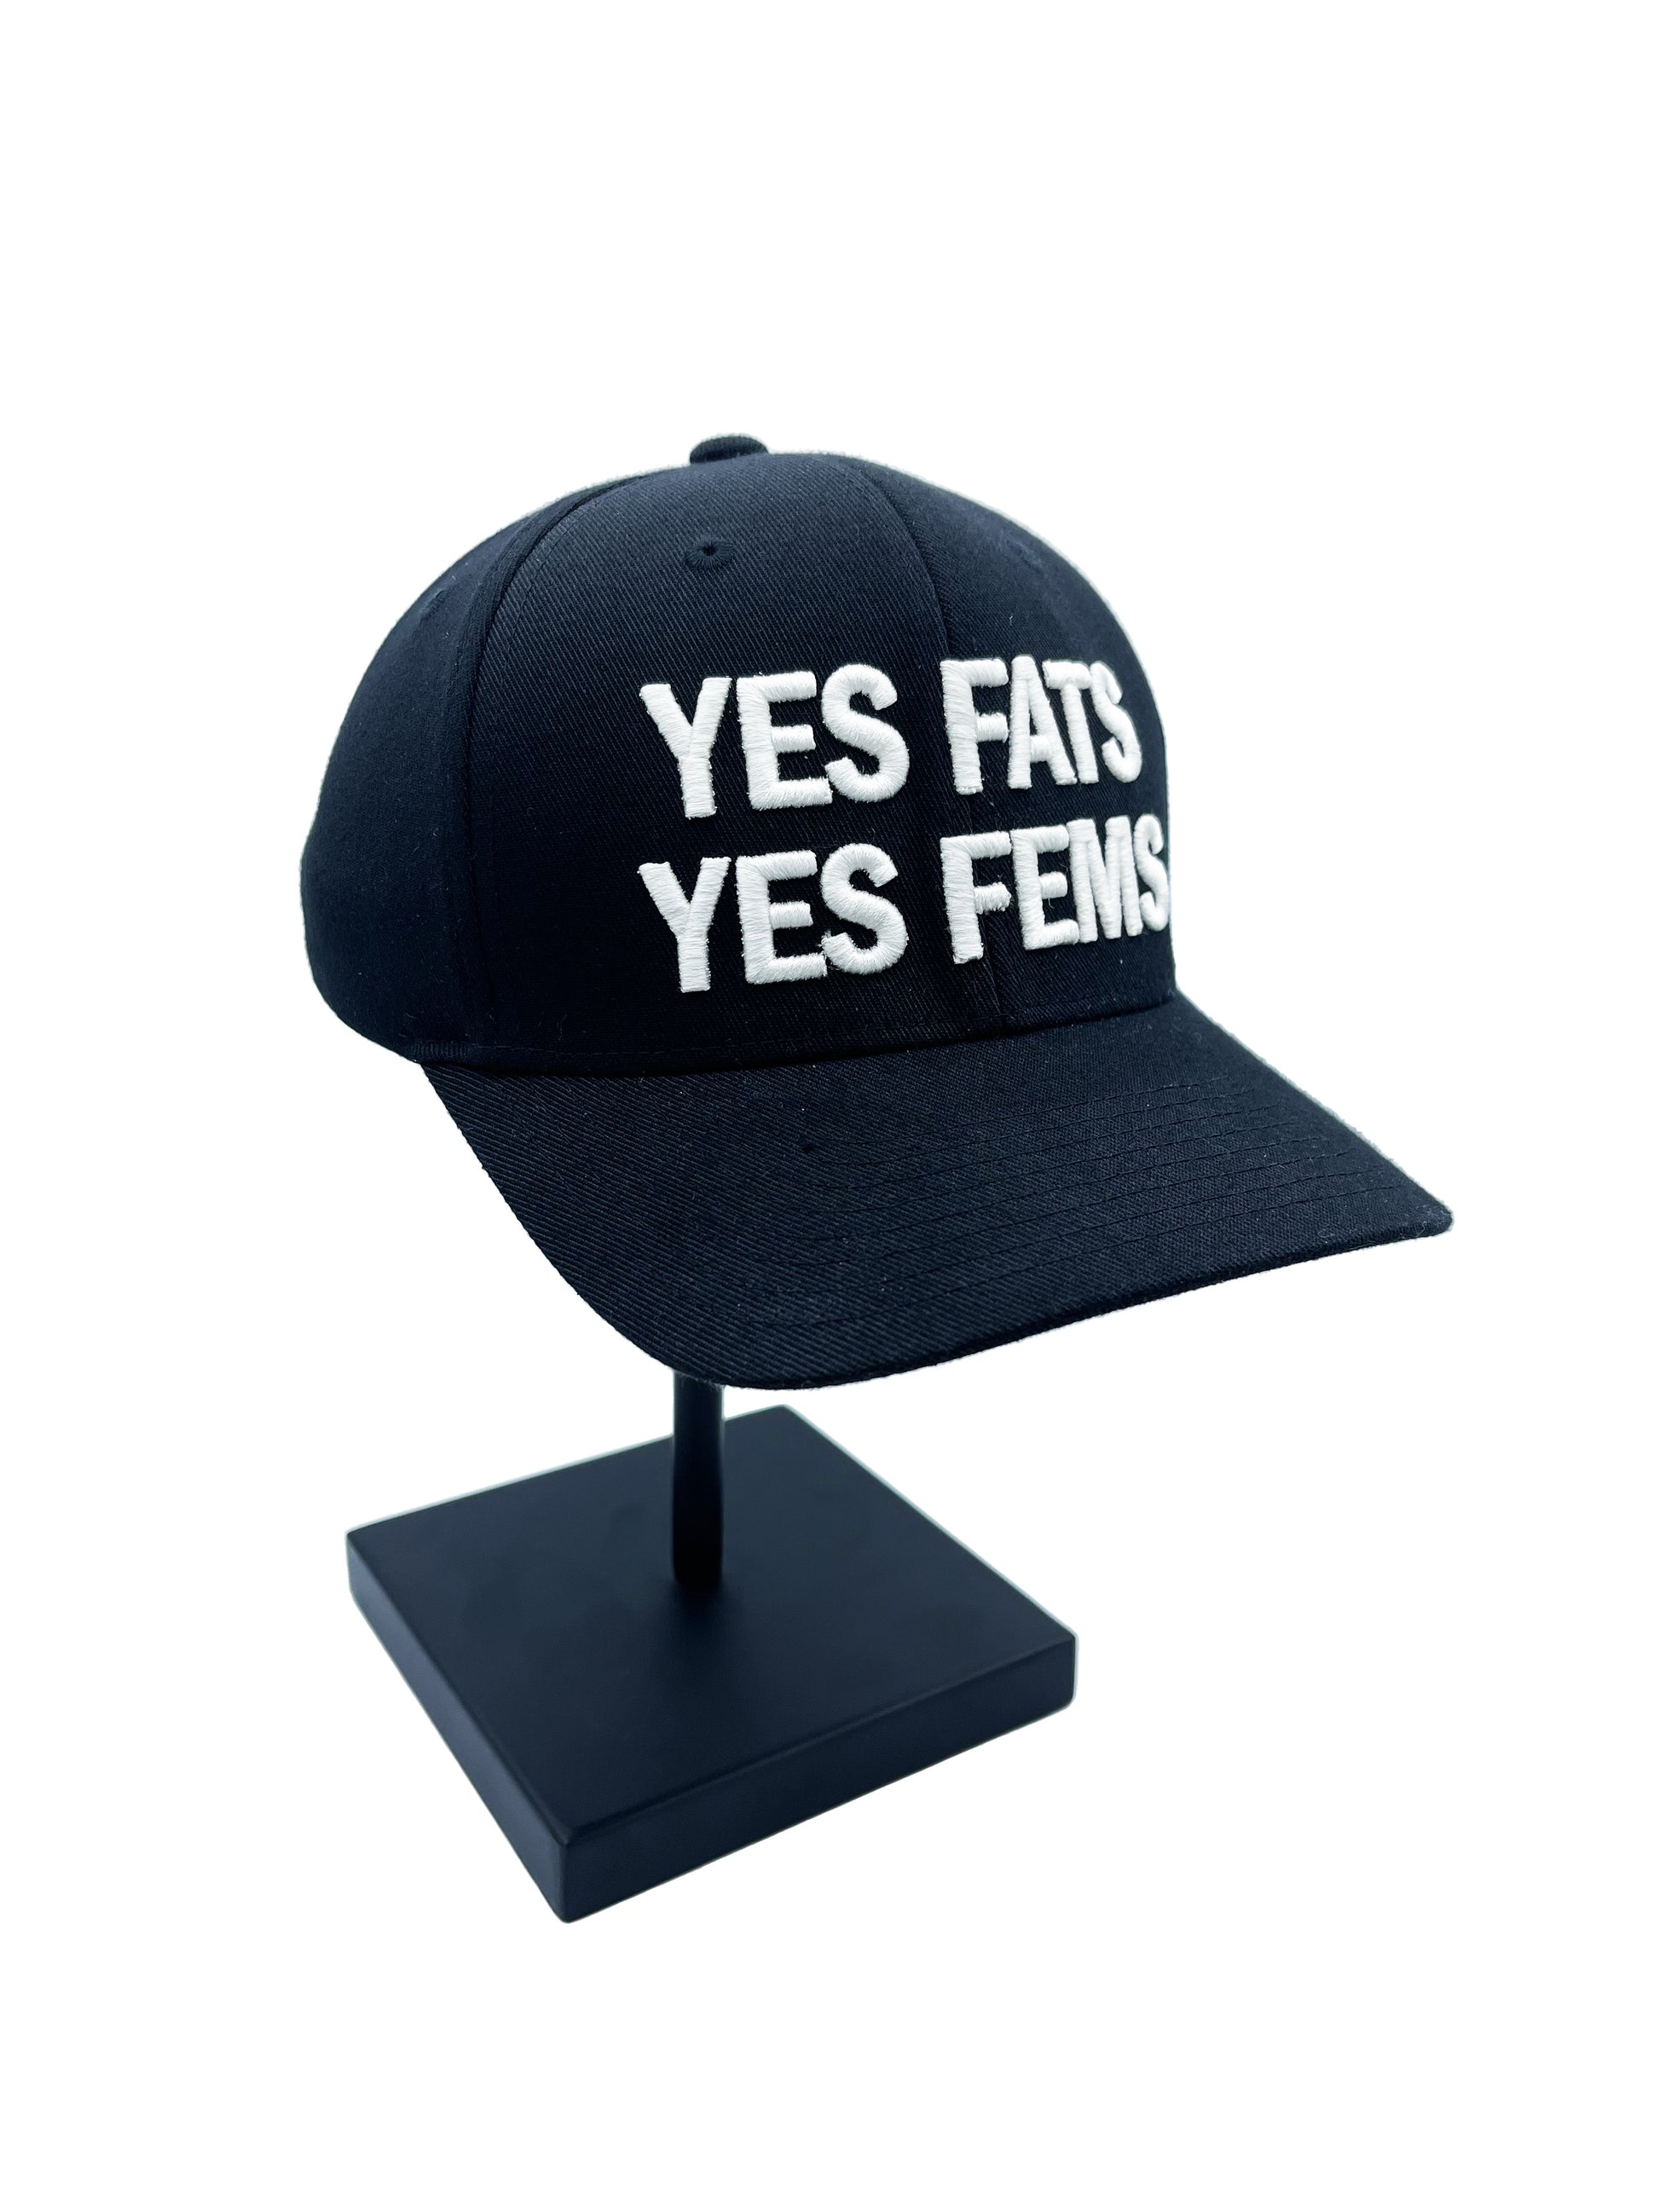 YFYF Hat Stand BACK.jpg